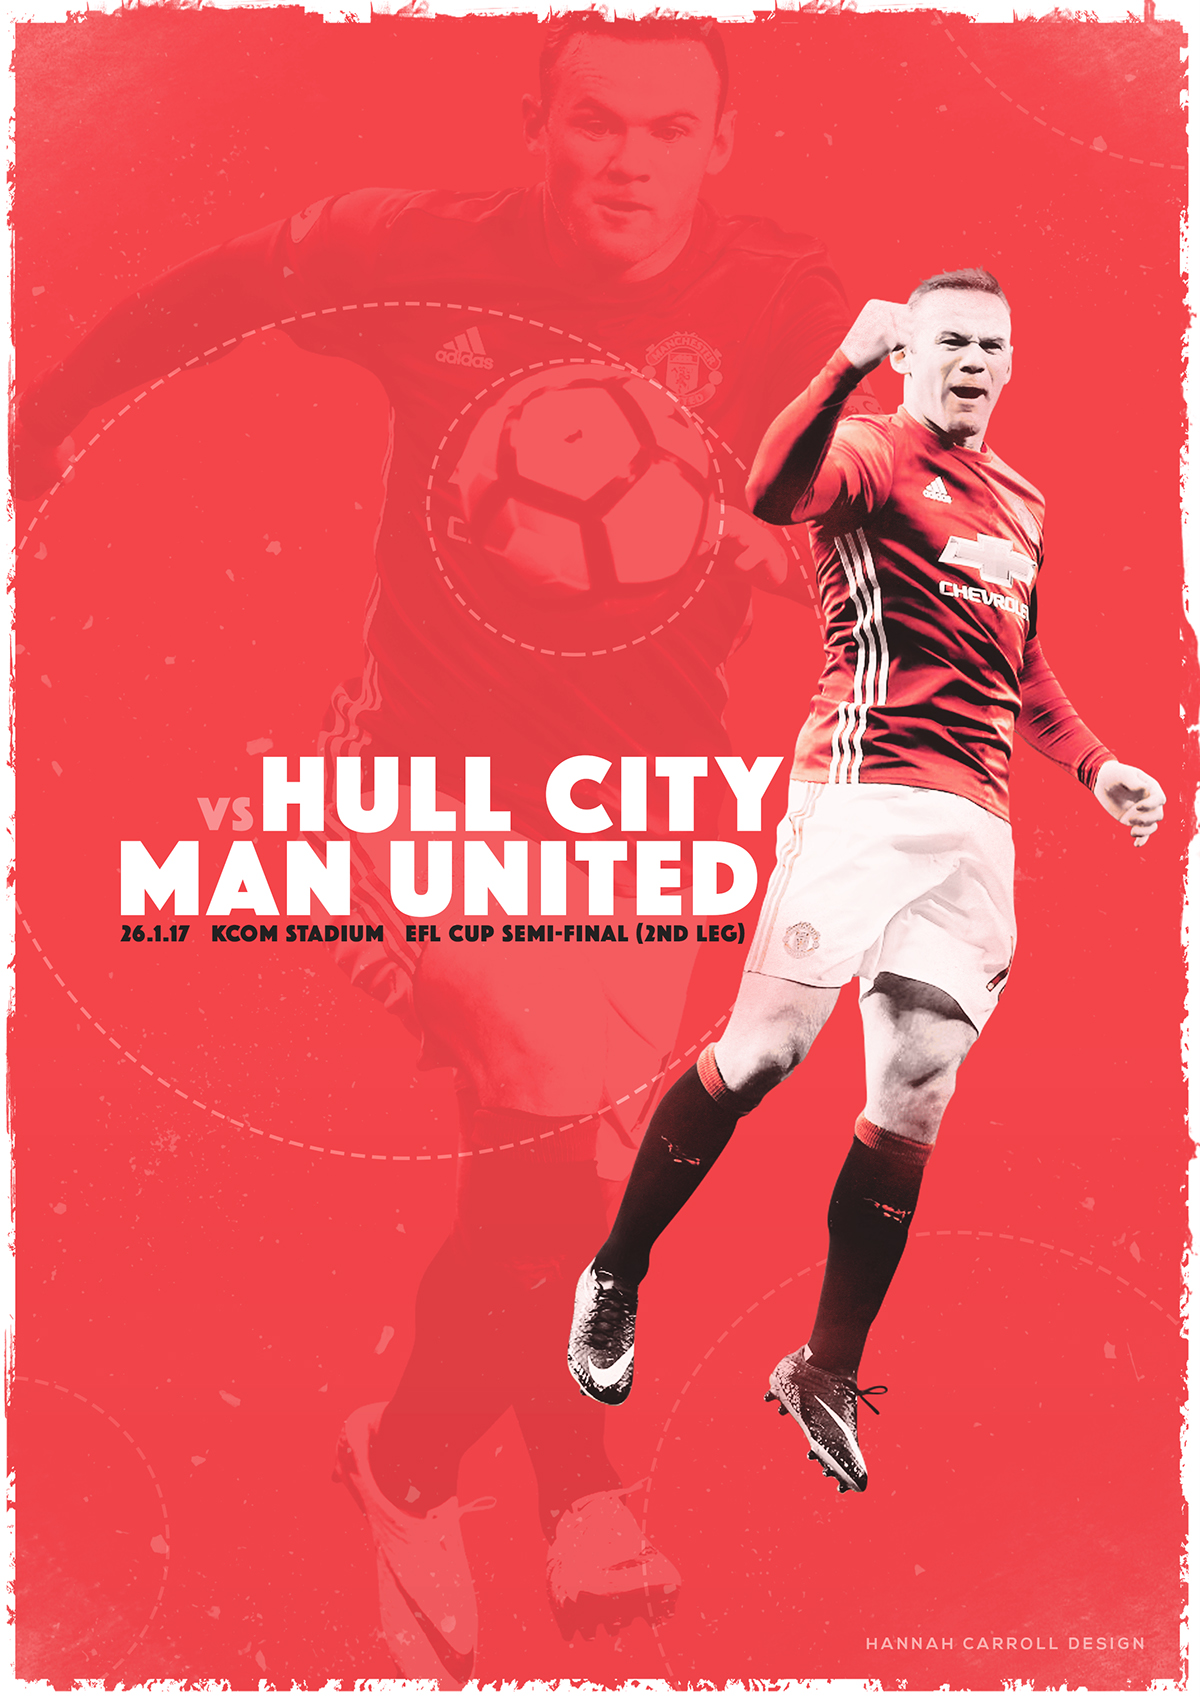 Manchester United man utd MUFC match day match graphic football EPL BPL Premier League mourinho